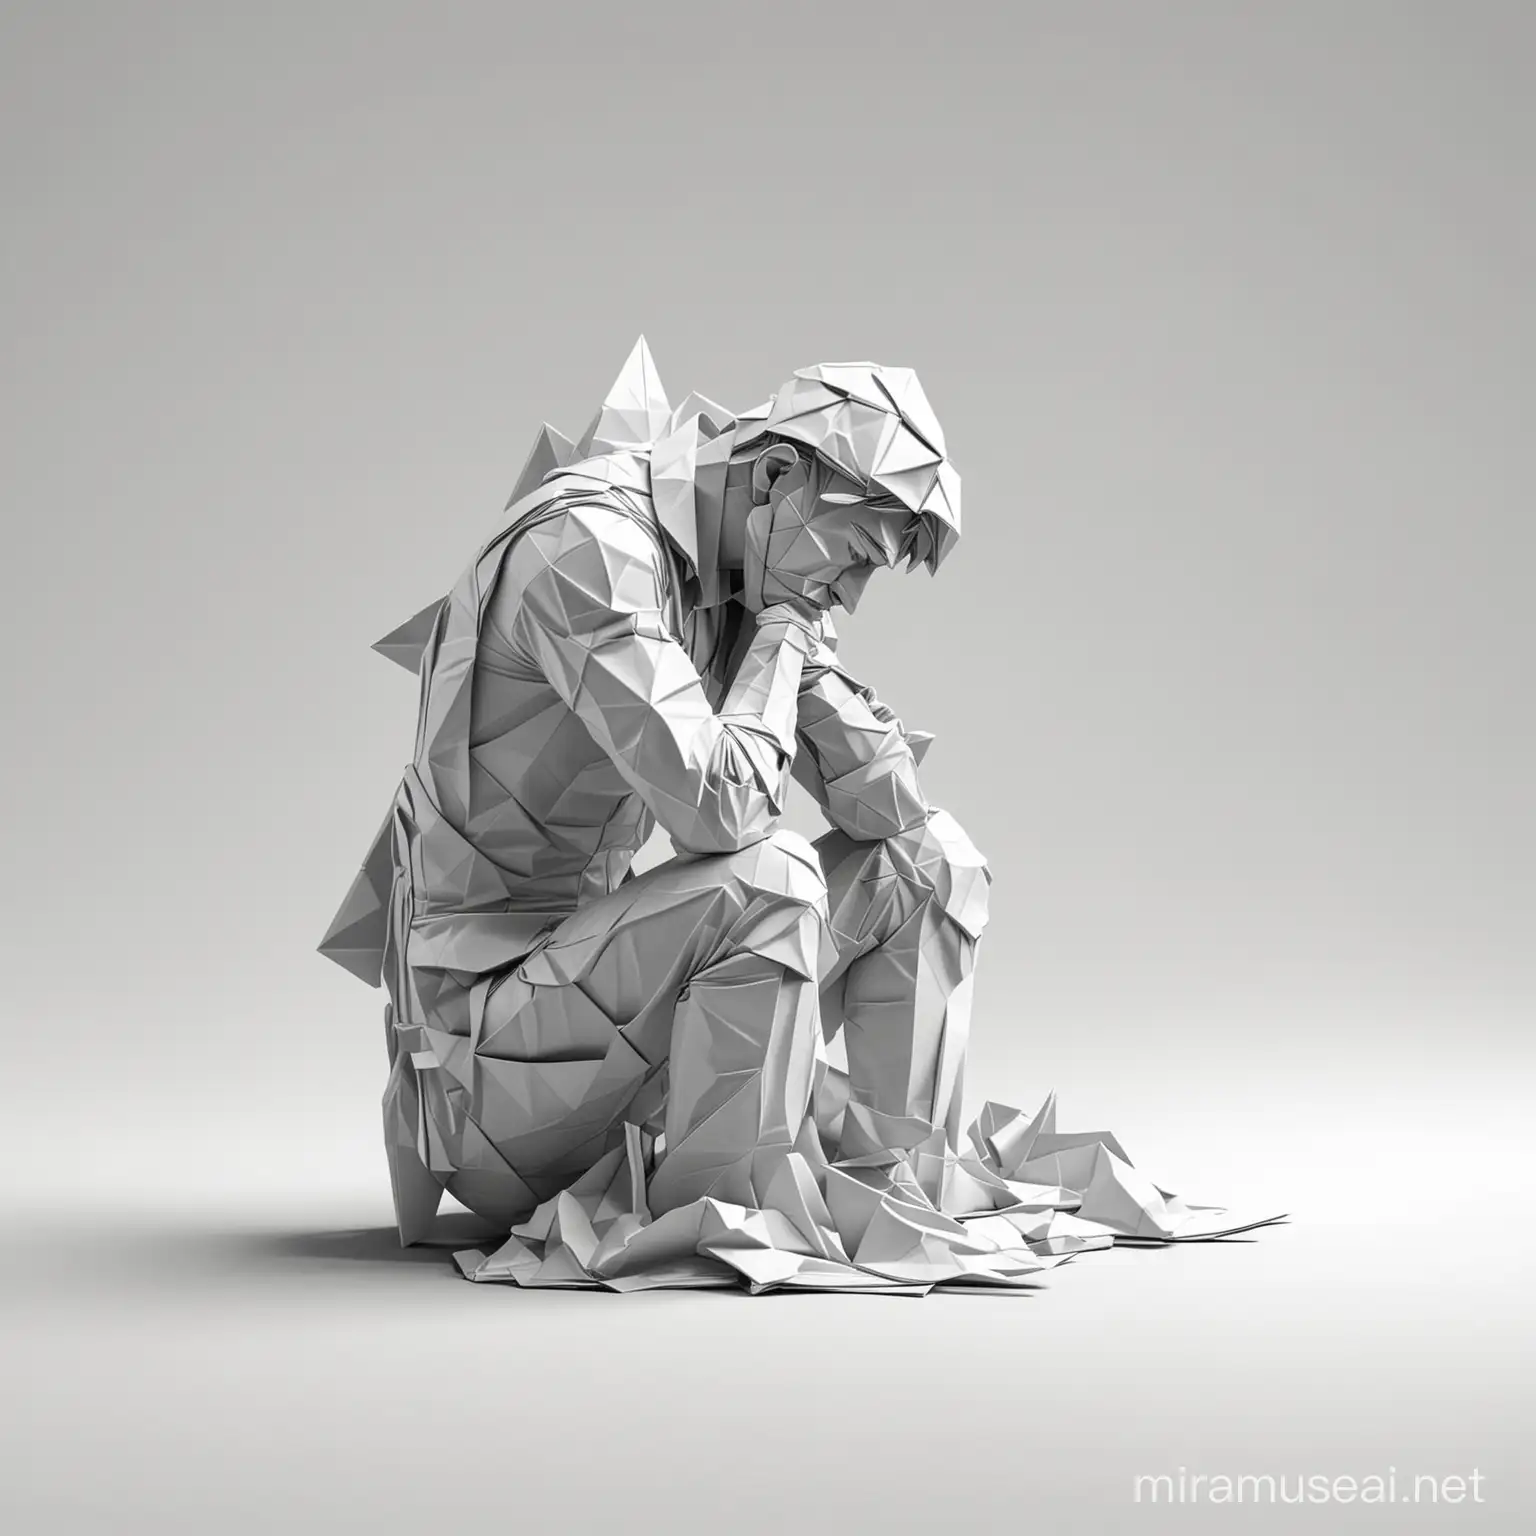 3D Origami Style Depressed Man Design Minimalist and Impactful Sticker Art